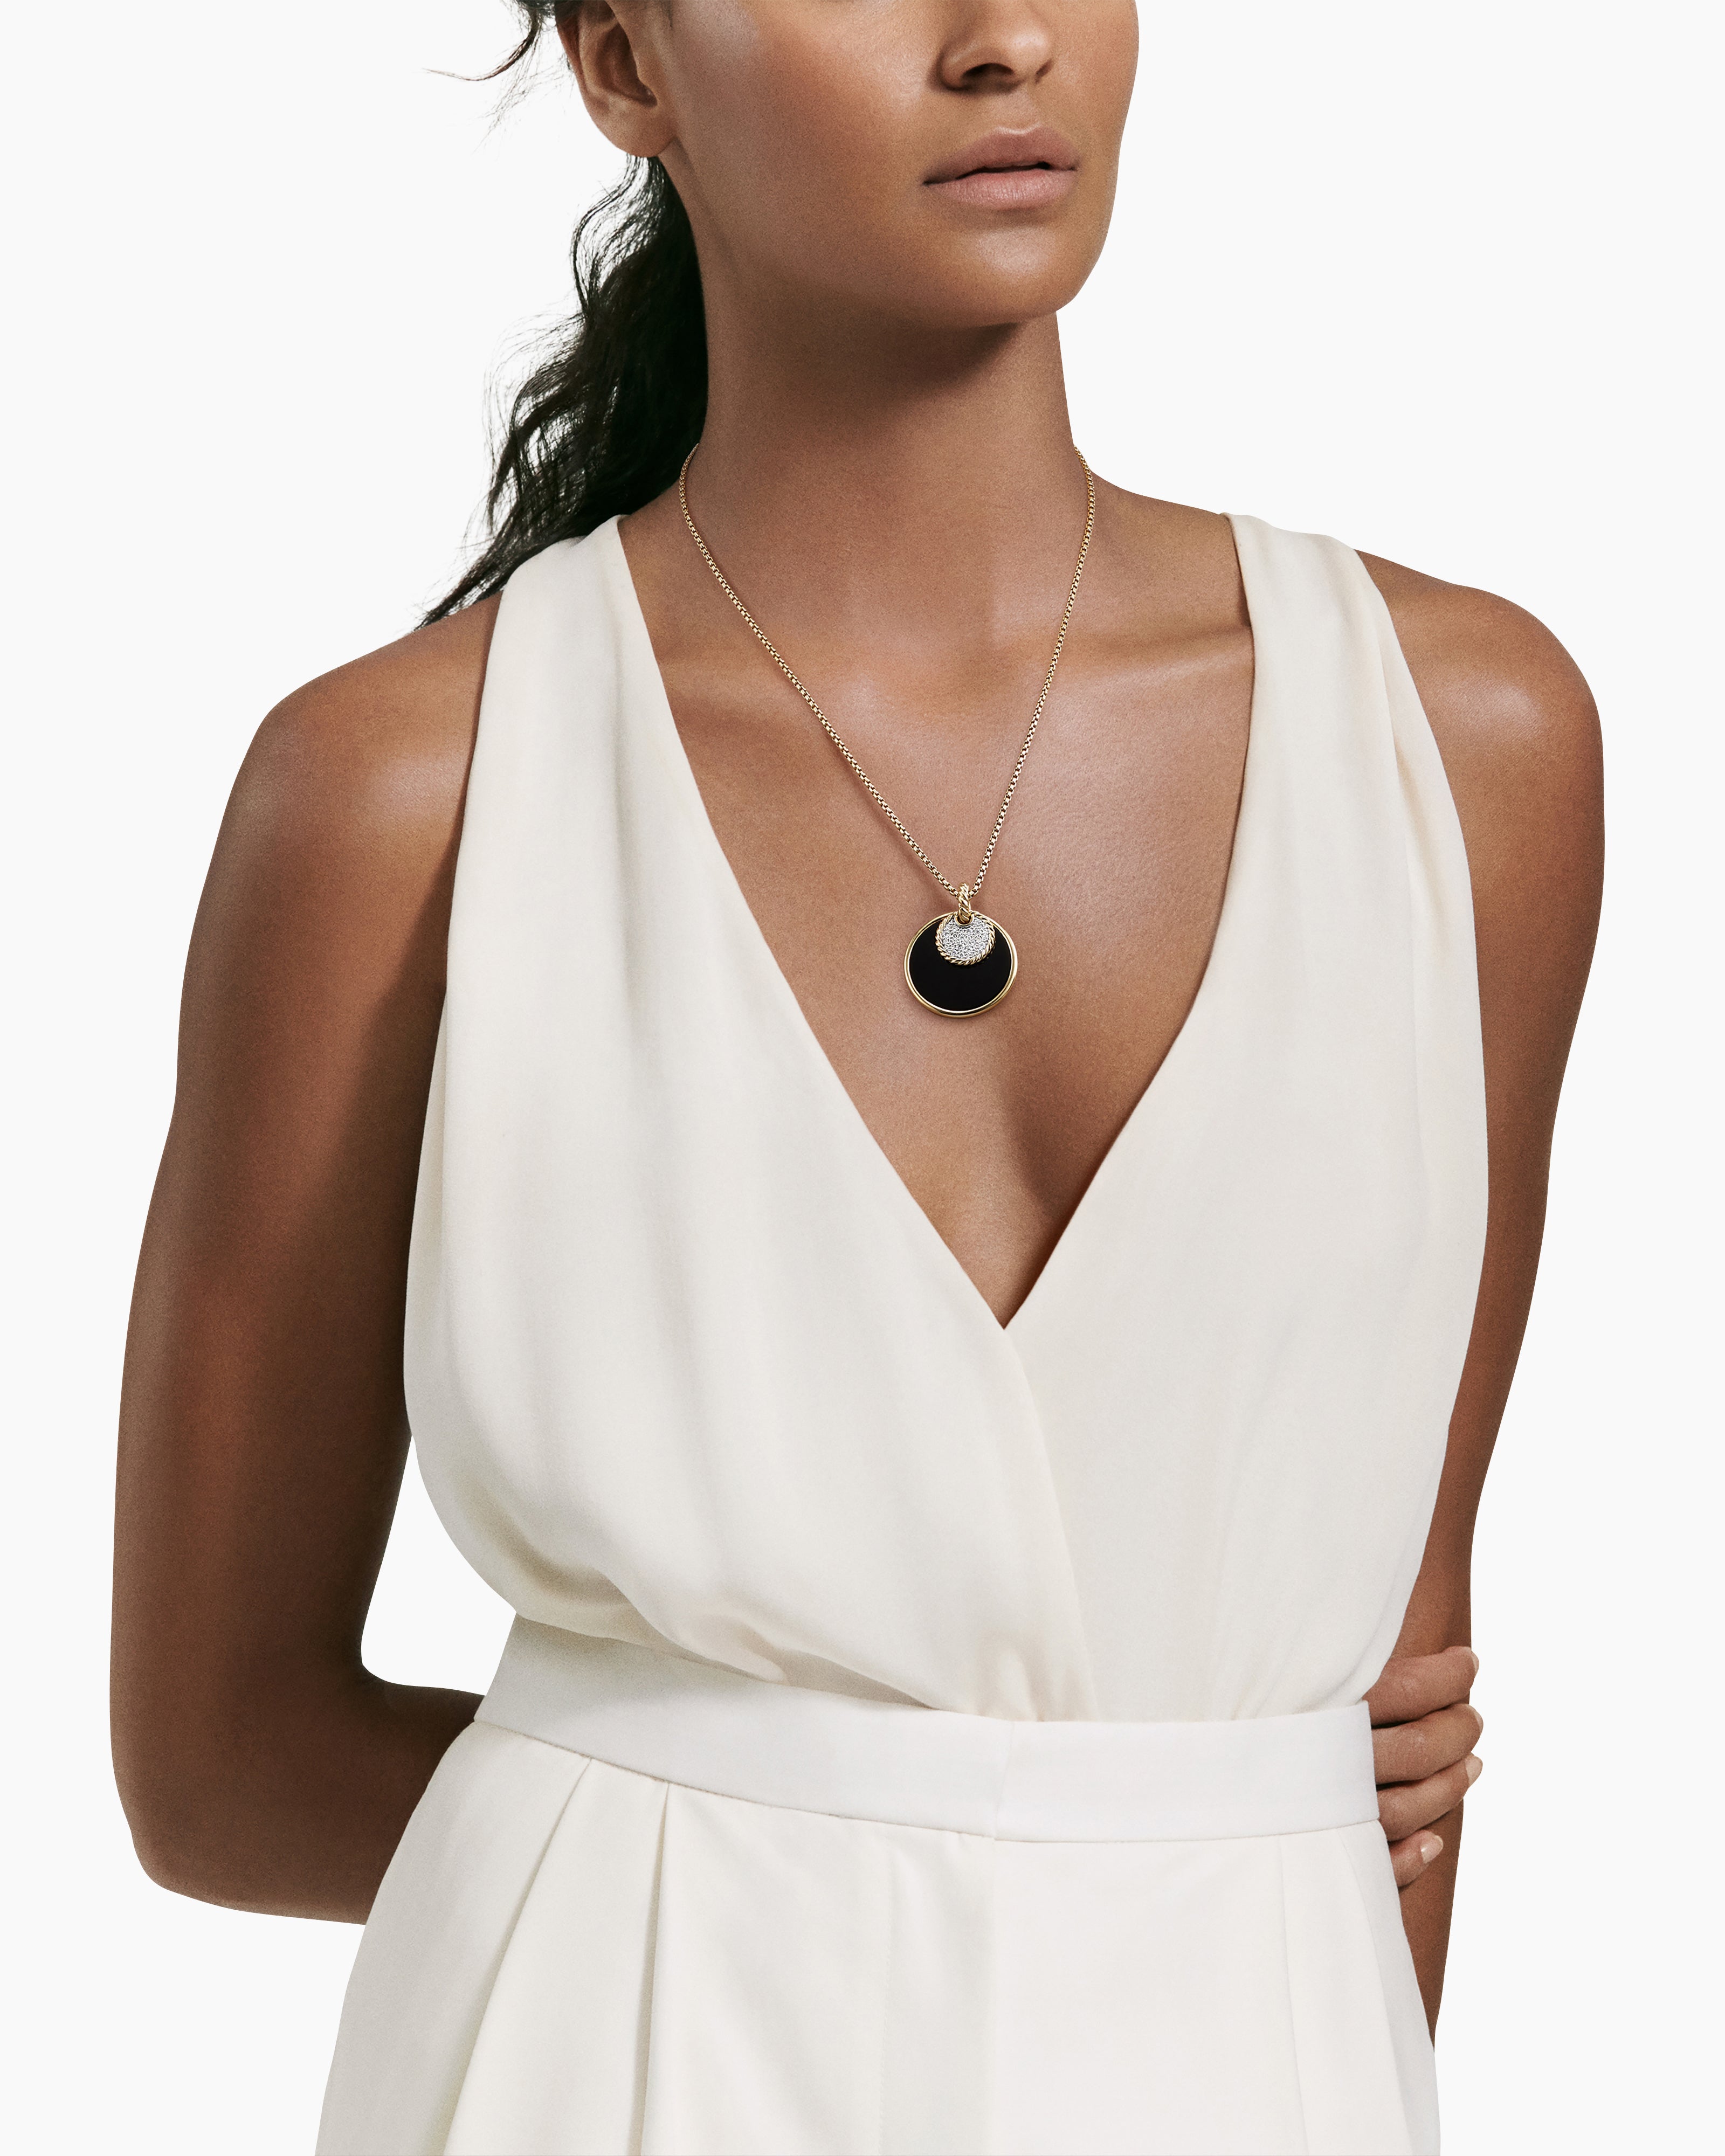 Tgirls Dainty Pearl Body Chain Gold Tassel Necklace Dress Jewelry for Women  and Girls : Amazon.in: Jewellery